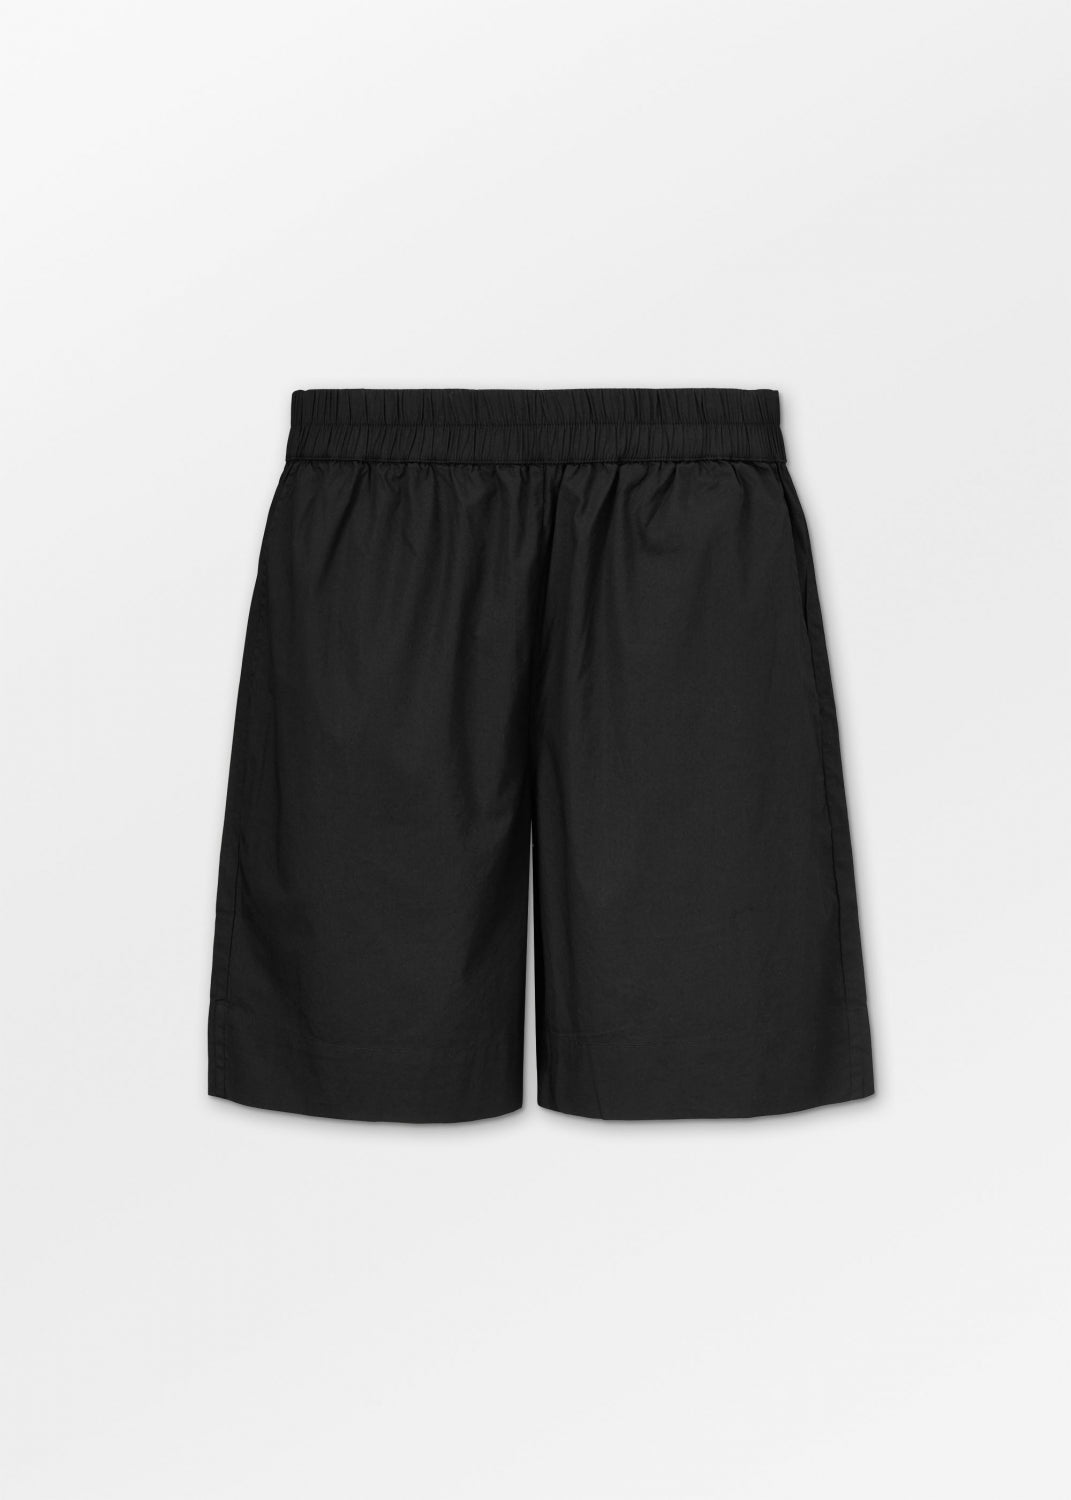 Aiayu "Shorts Long" Black